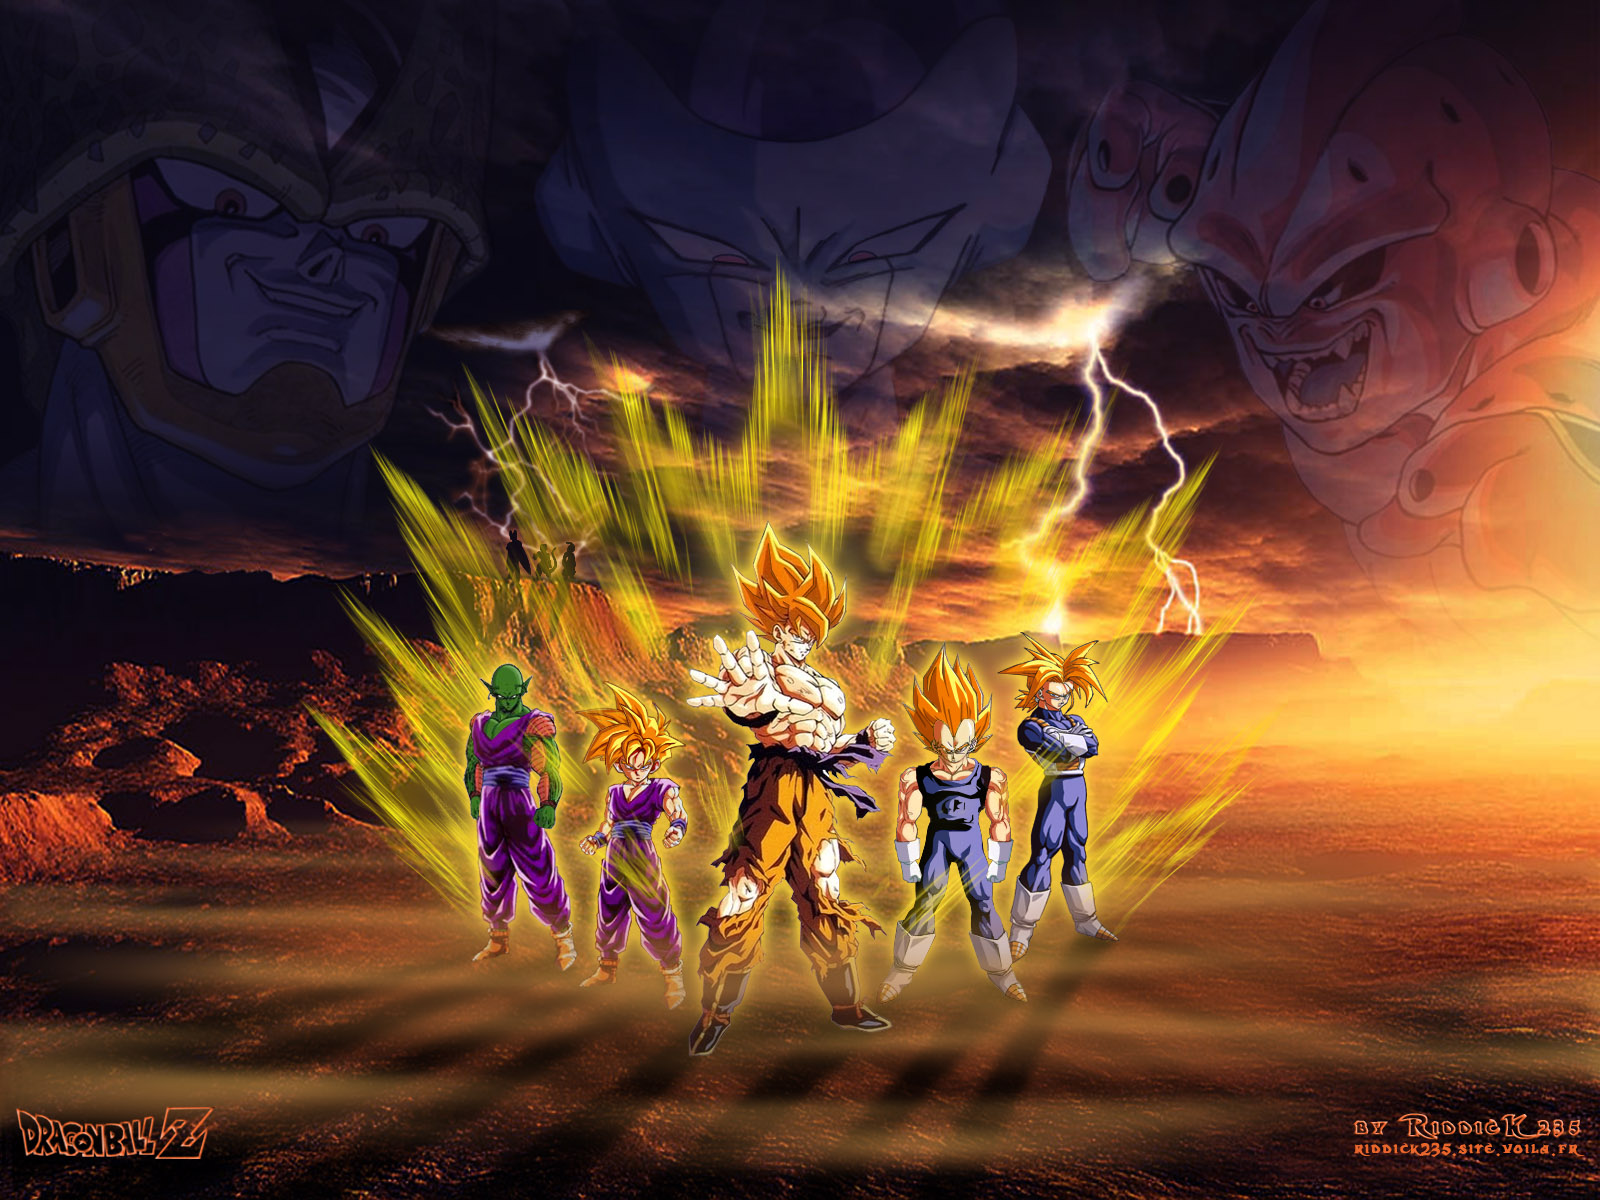 Dragon Ball characters, including Goku, Cell, Vegeta, Gohan, Trunks, Frieza, and Majin Buu in Super Saiyan form.